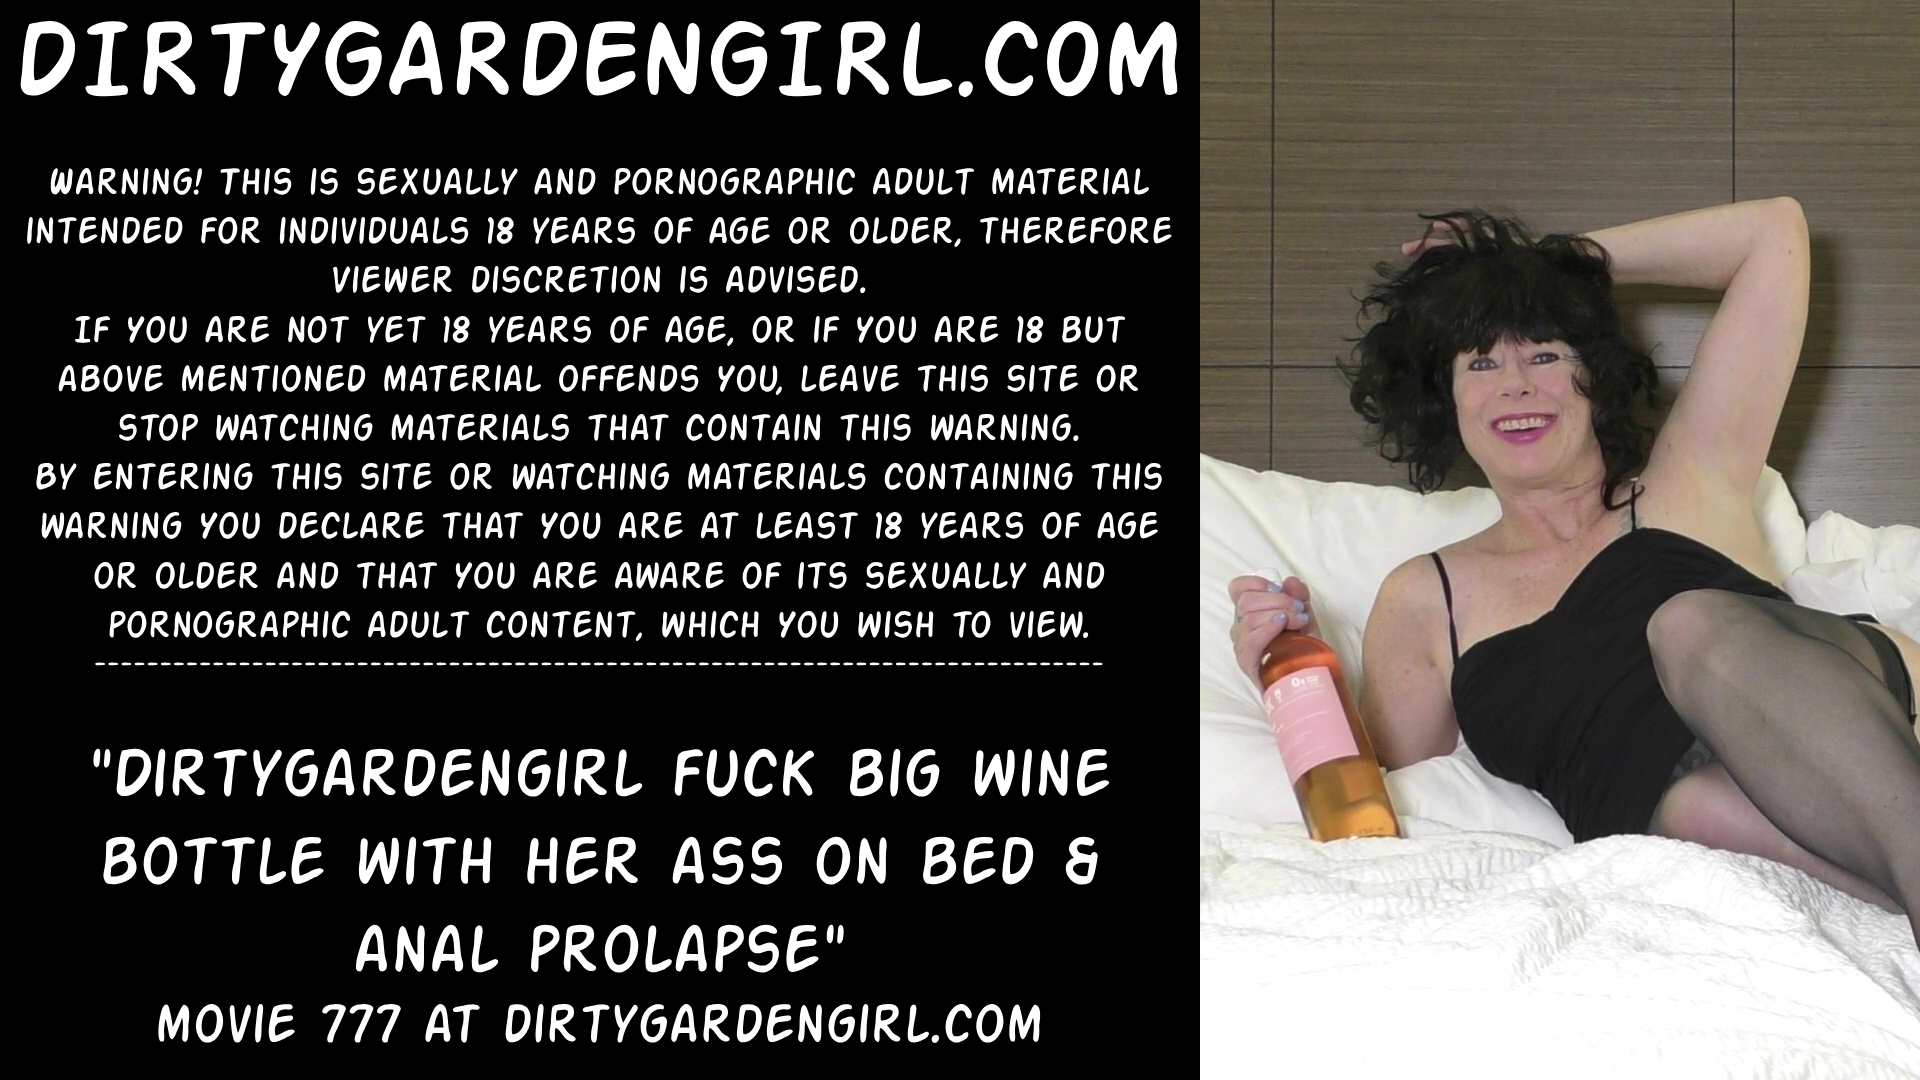 Dirtygardengirl fuck big wine bottle & anal prolapse